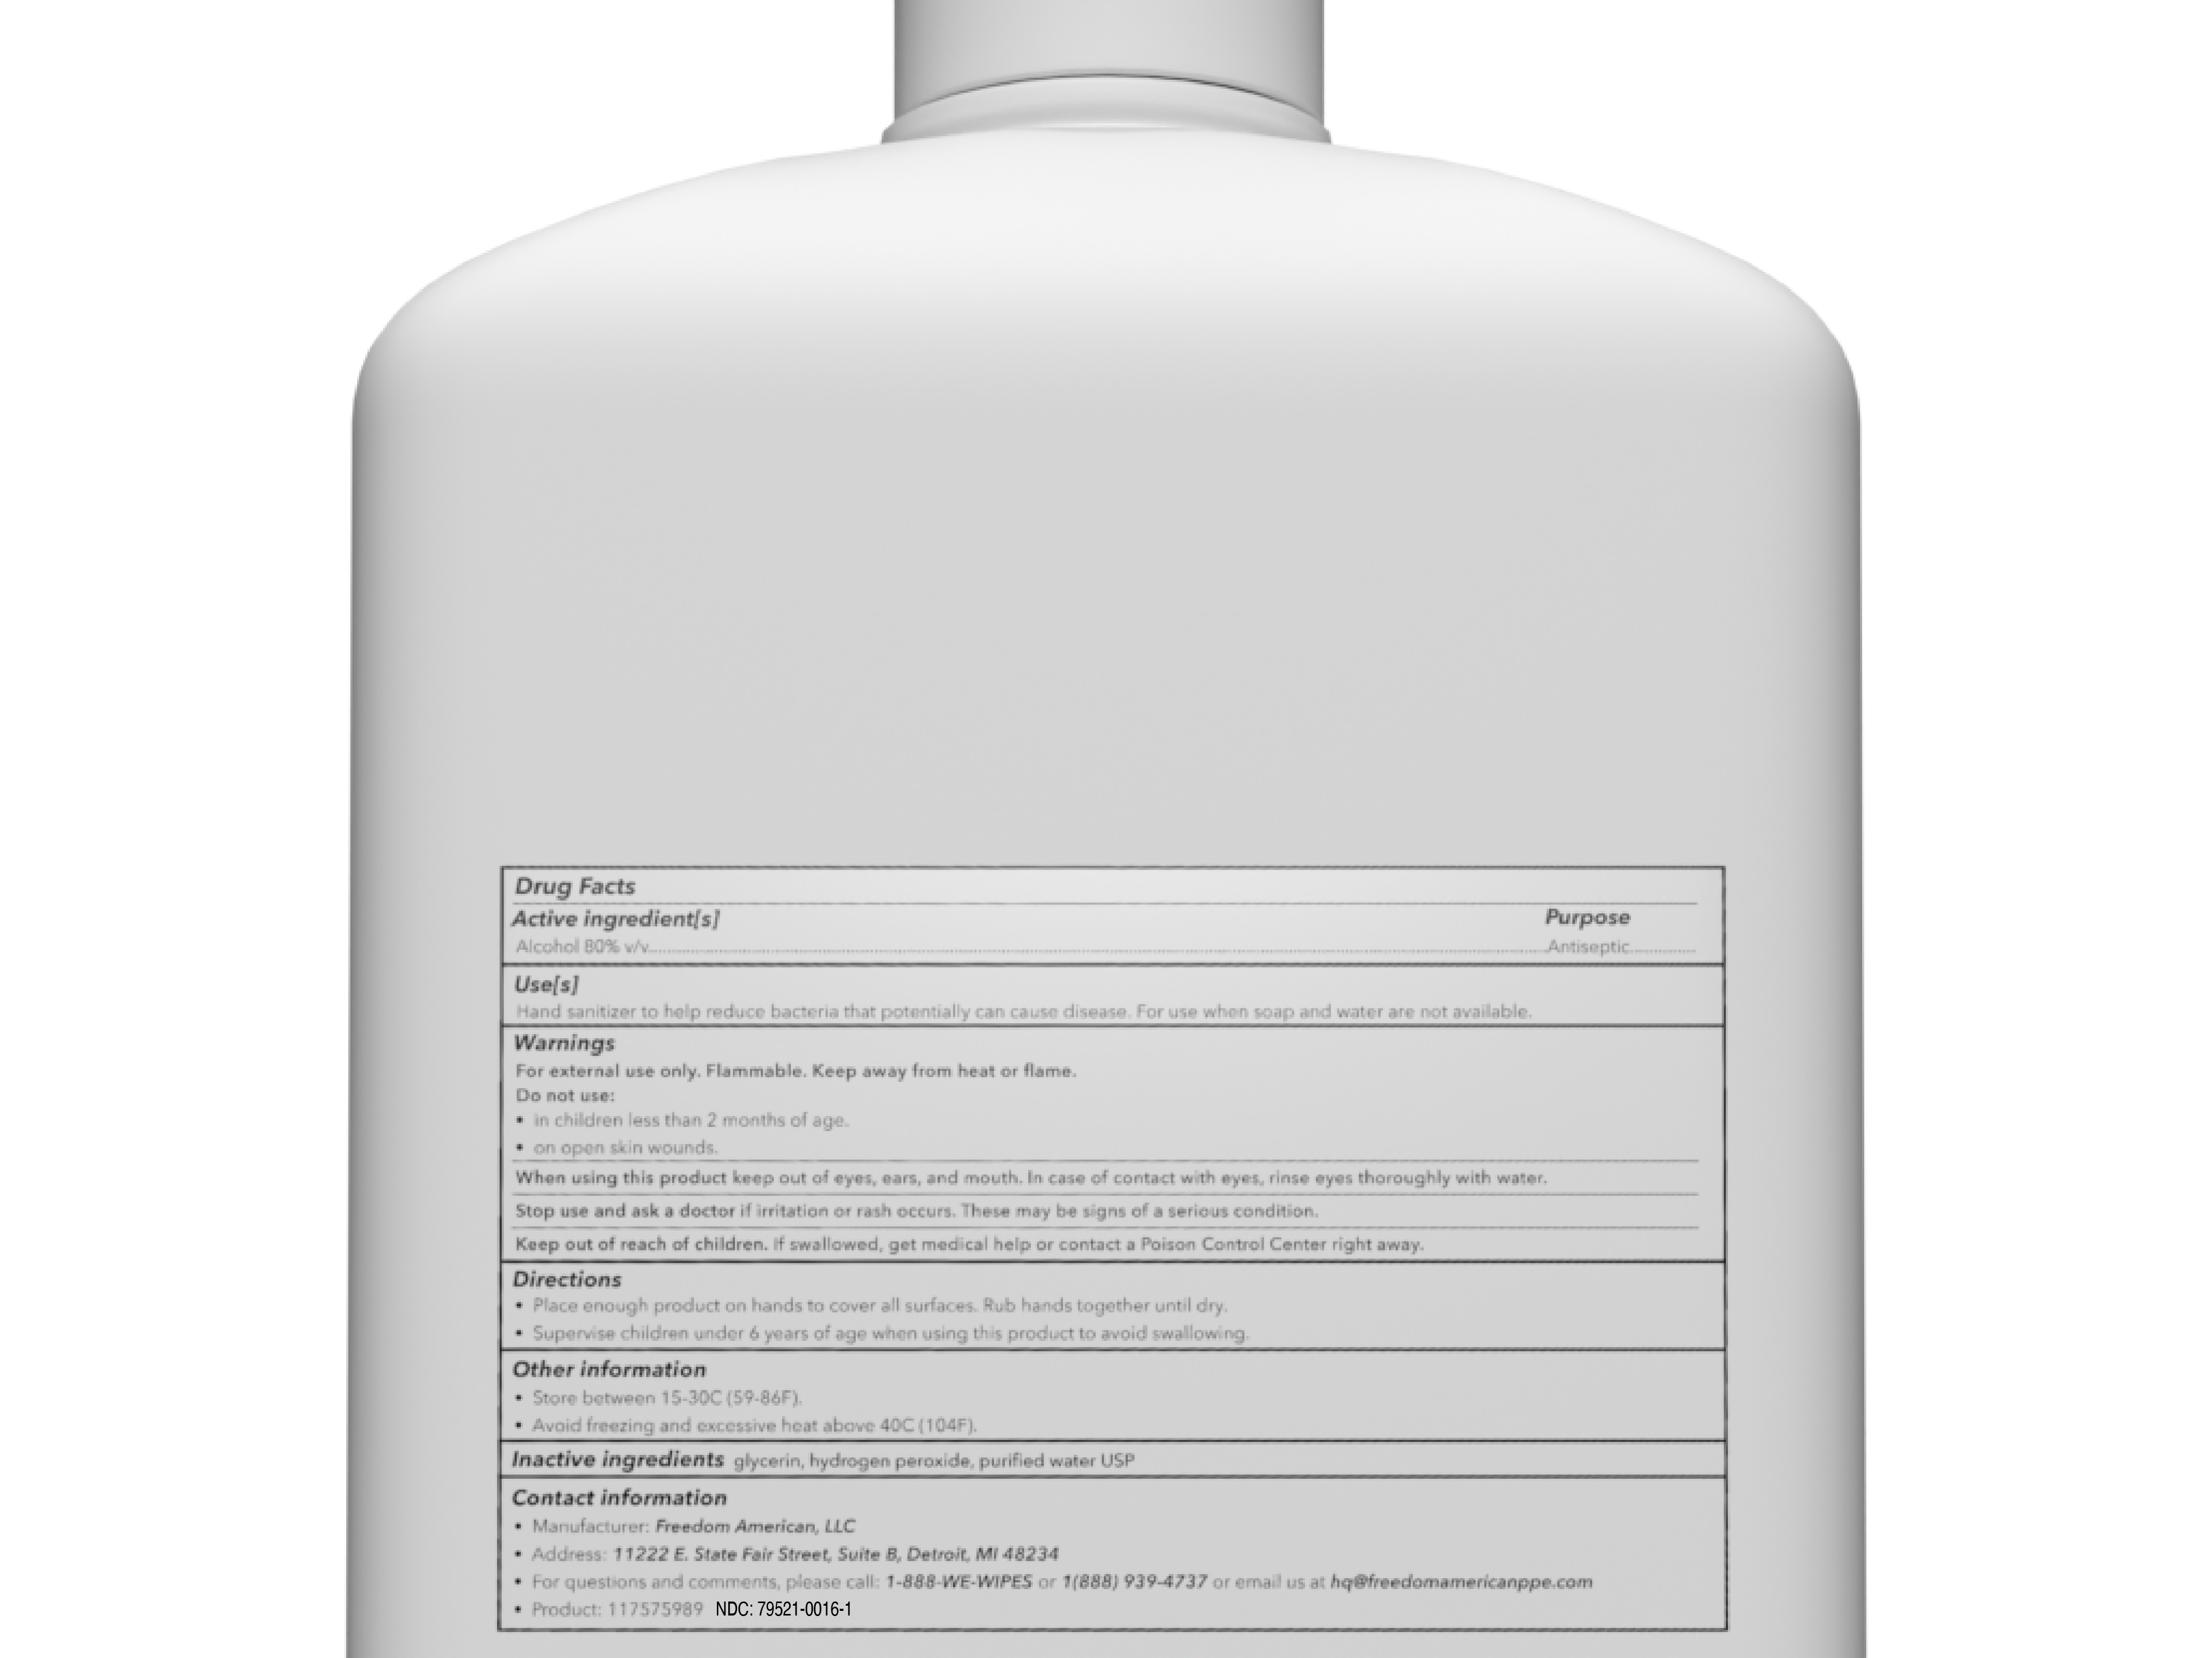 Freedom American 16.9 oz (500 mL) Hand Sanitizer Bottle Back Label